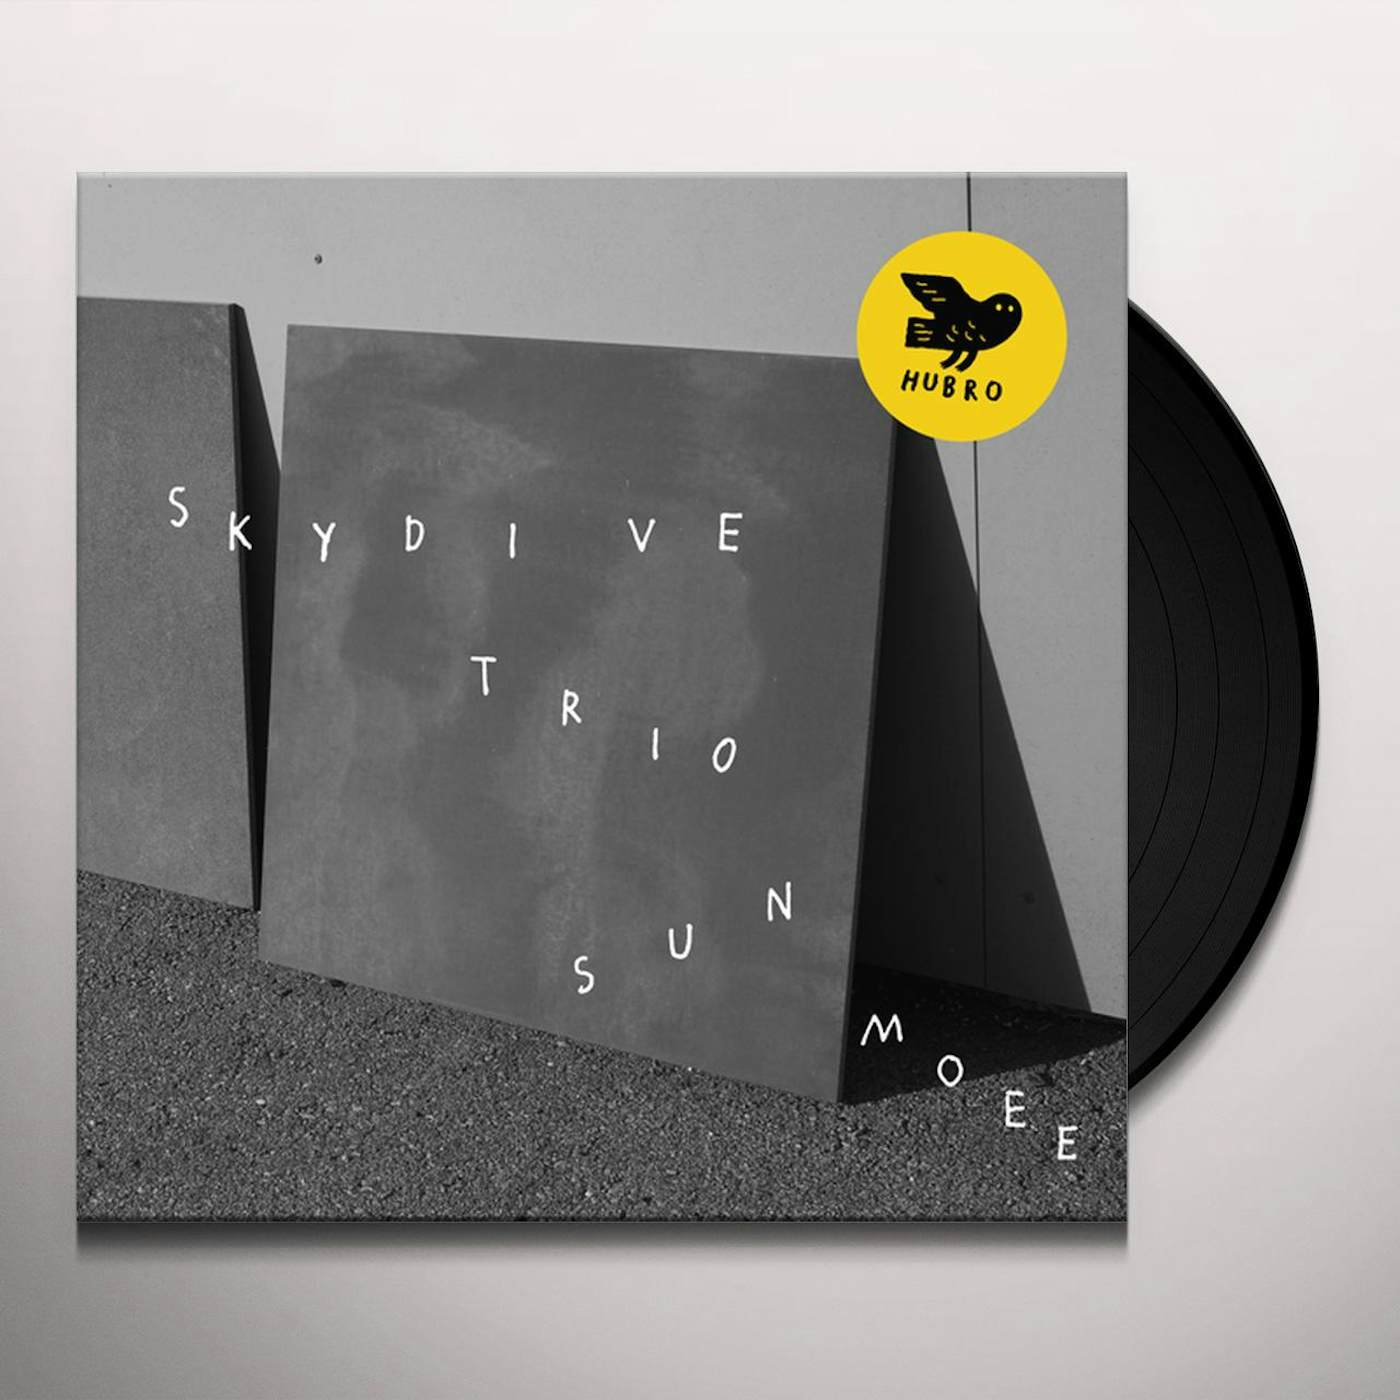 Skydive Trio SUN MOEE (BONUS CD) Vinyl Record - UK Release